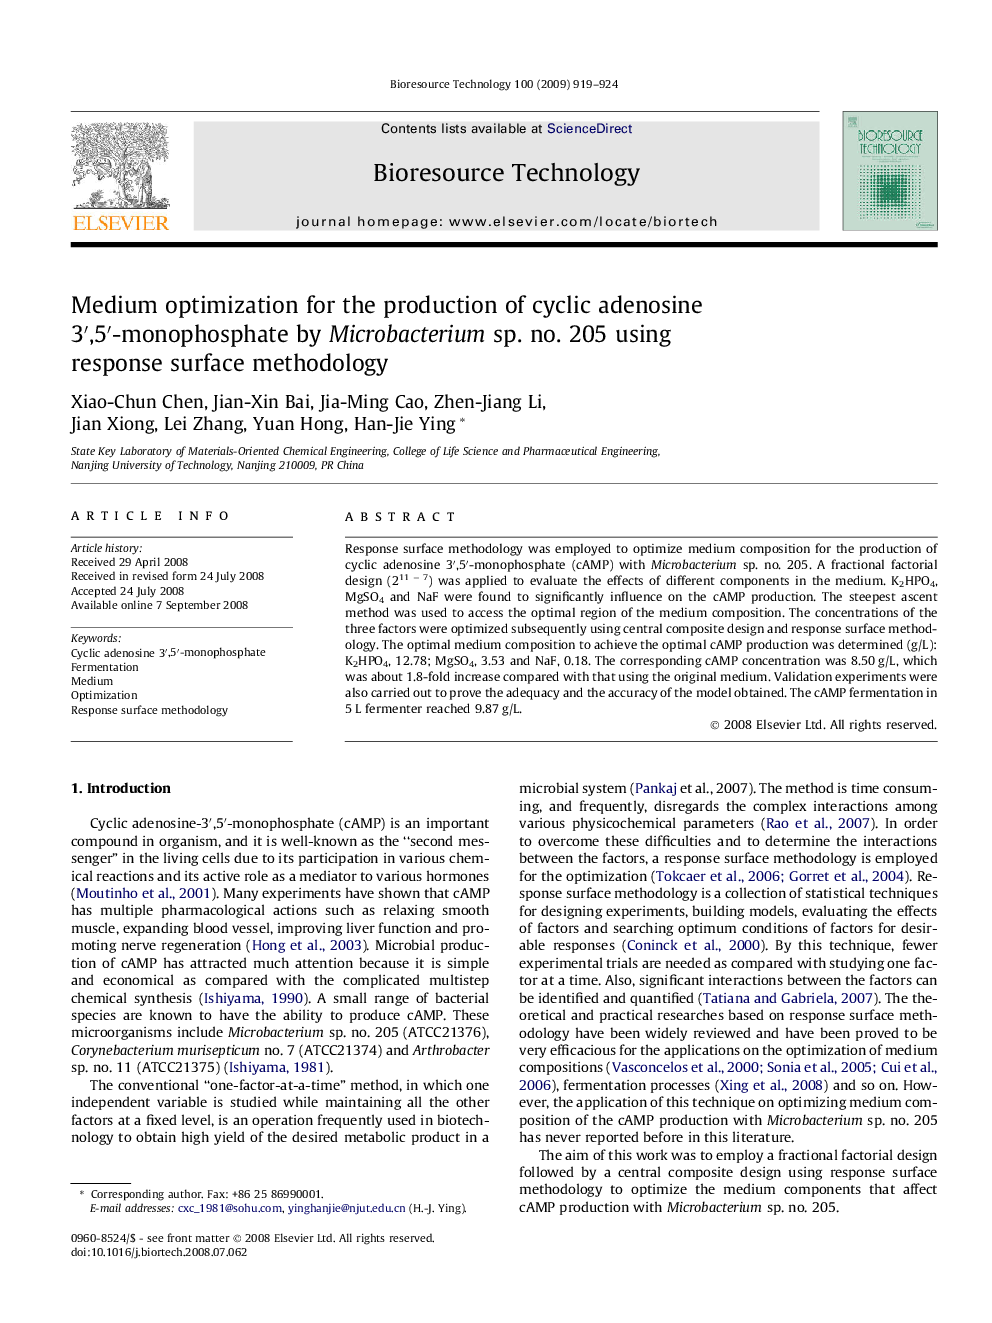 Medium optimization for the production of cyclic adenosine 3â²,5â²-monophosphate by Microbacterium sp. no. 205 using response surface methodology